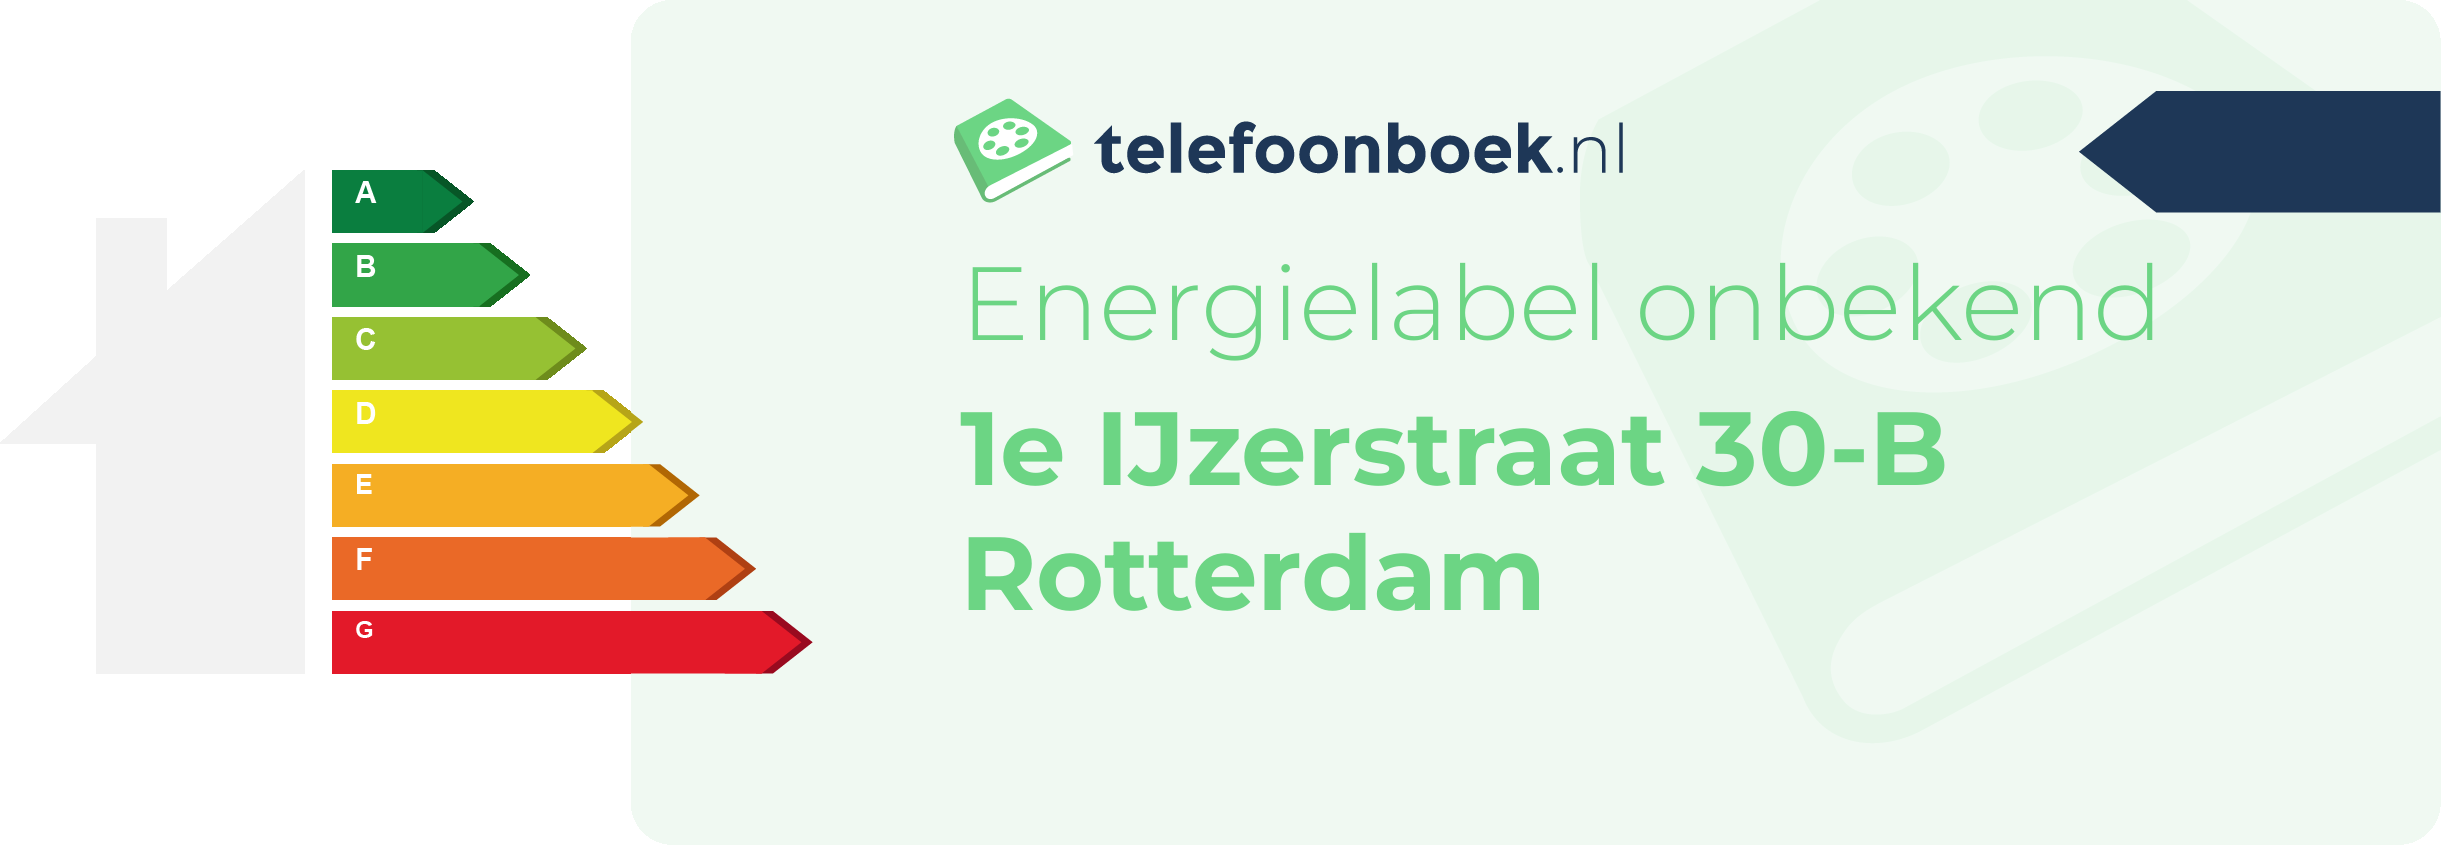 Energielabel 1e IJzerstraat 30-B Rotterdam